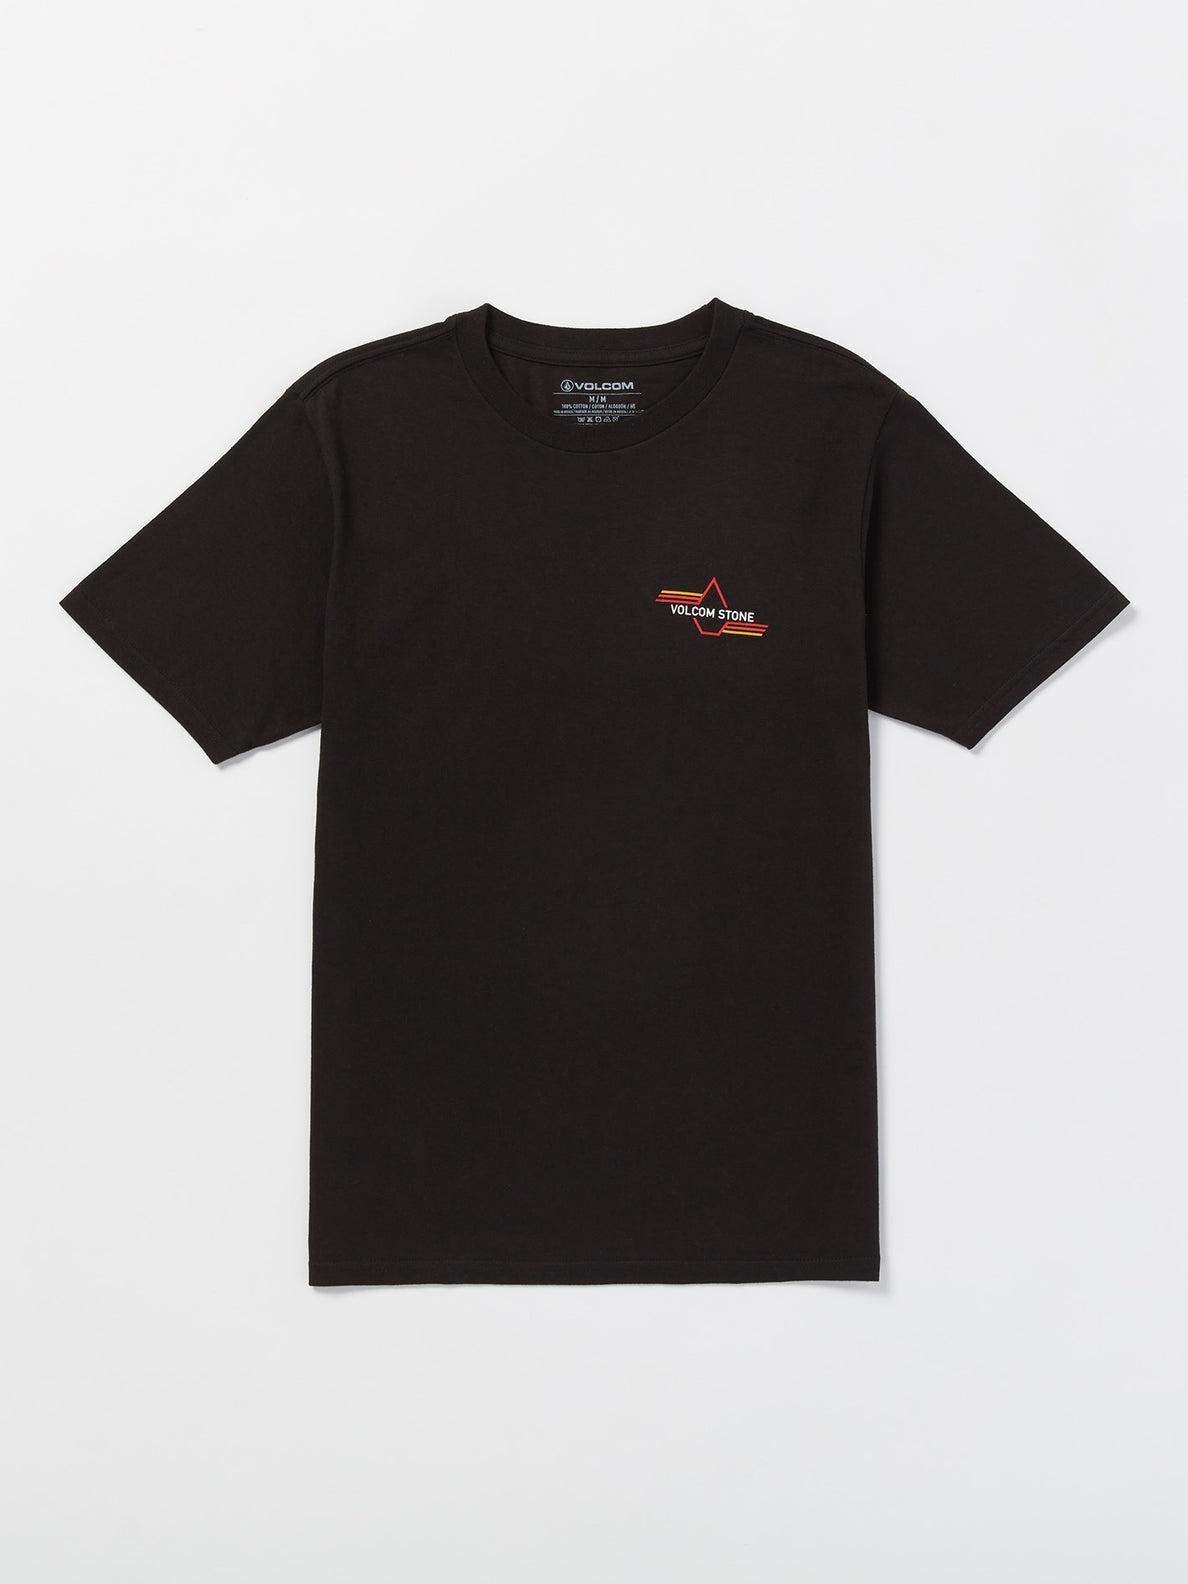 Stone Tanker Short Sleeve T-Shirt - Black